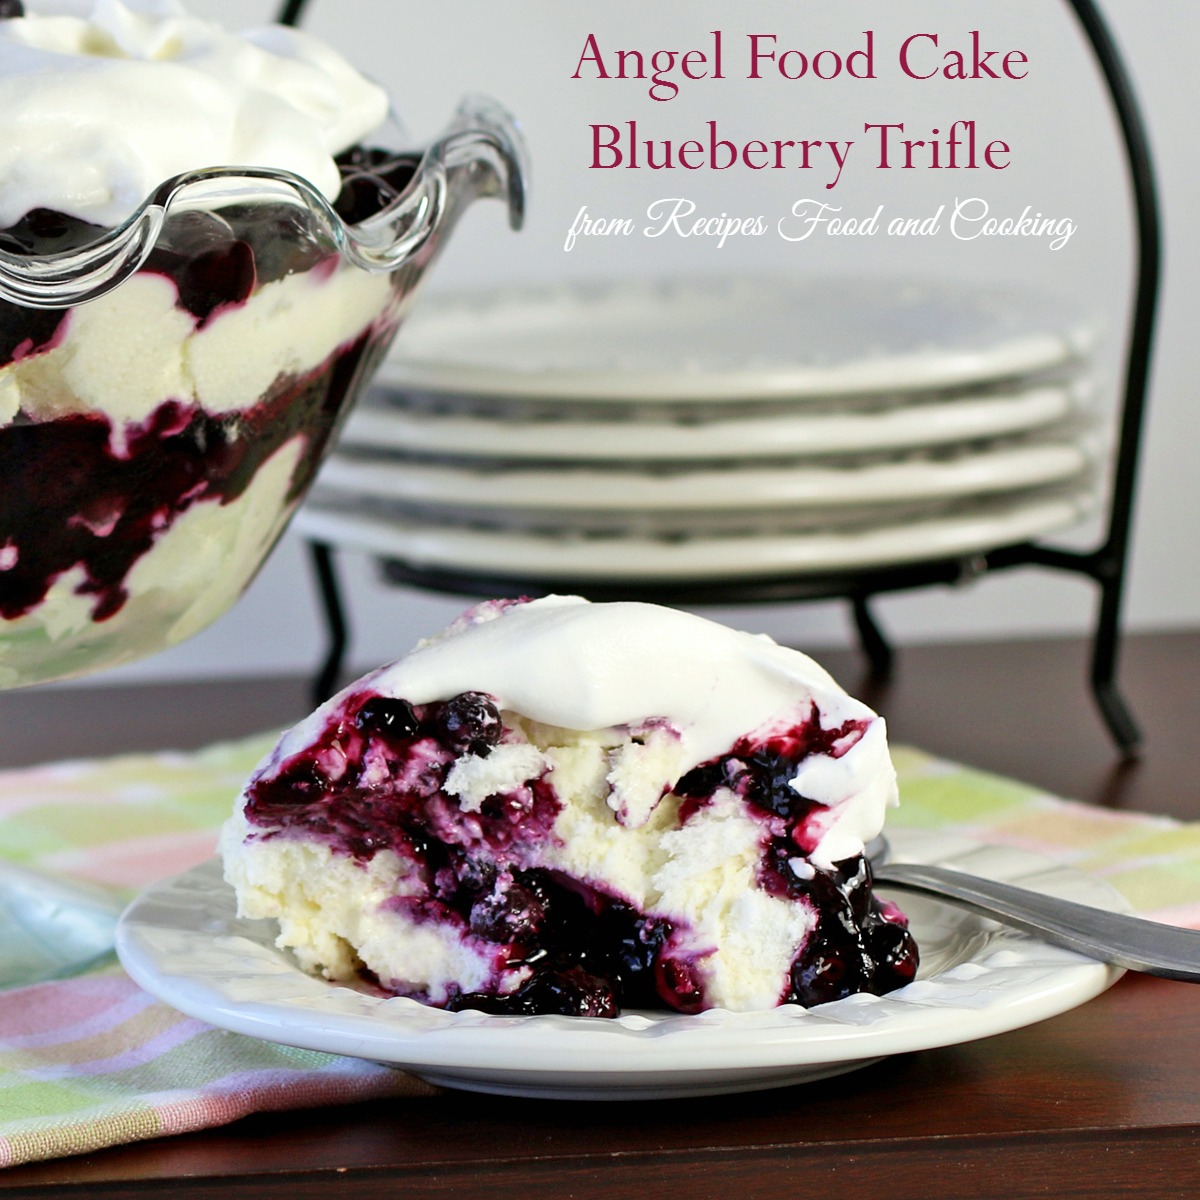 Angel Food Cake Blueberry Trifle